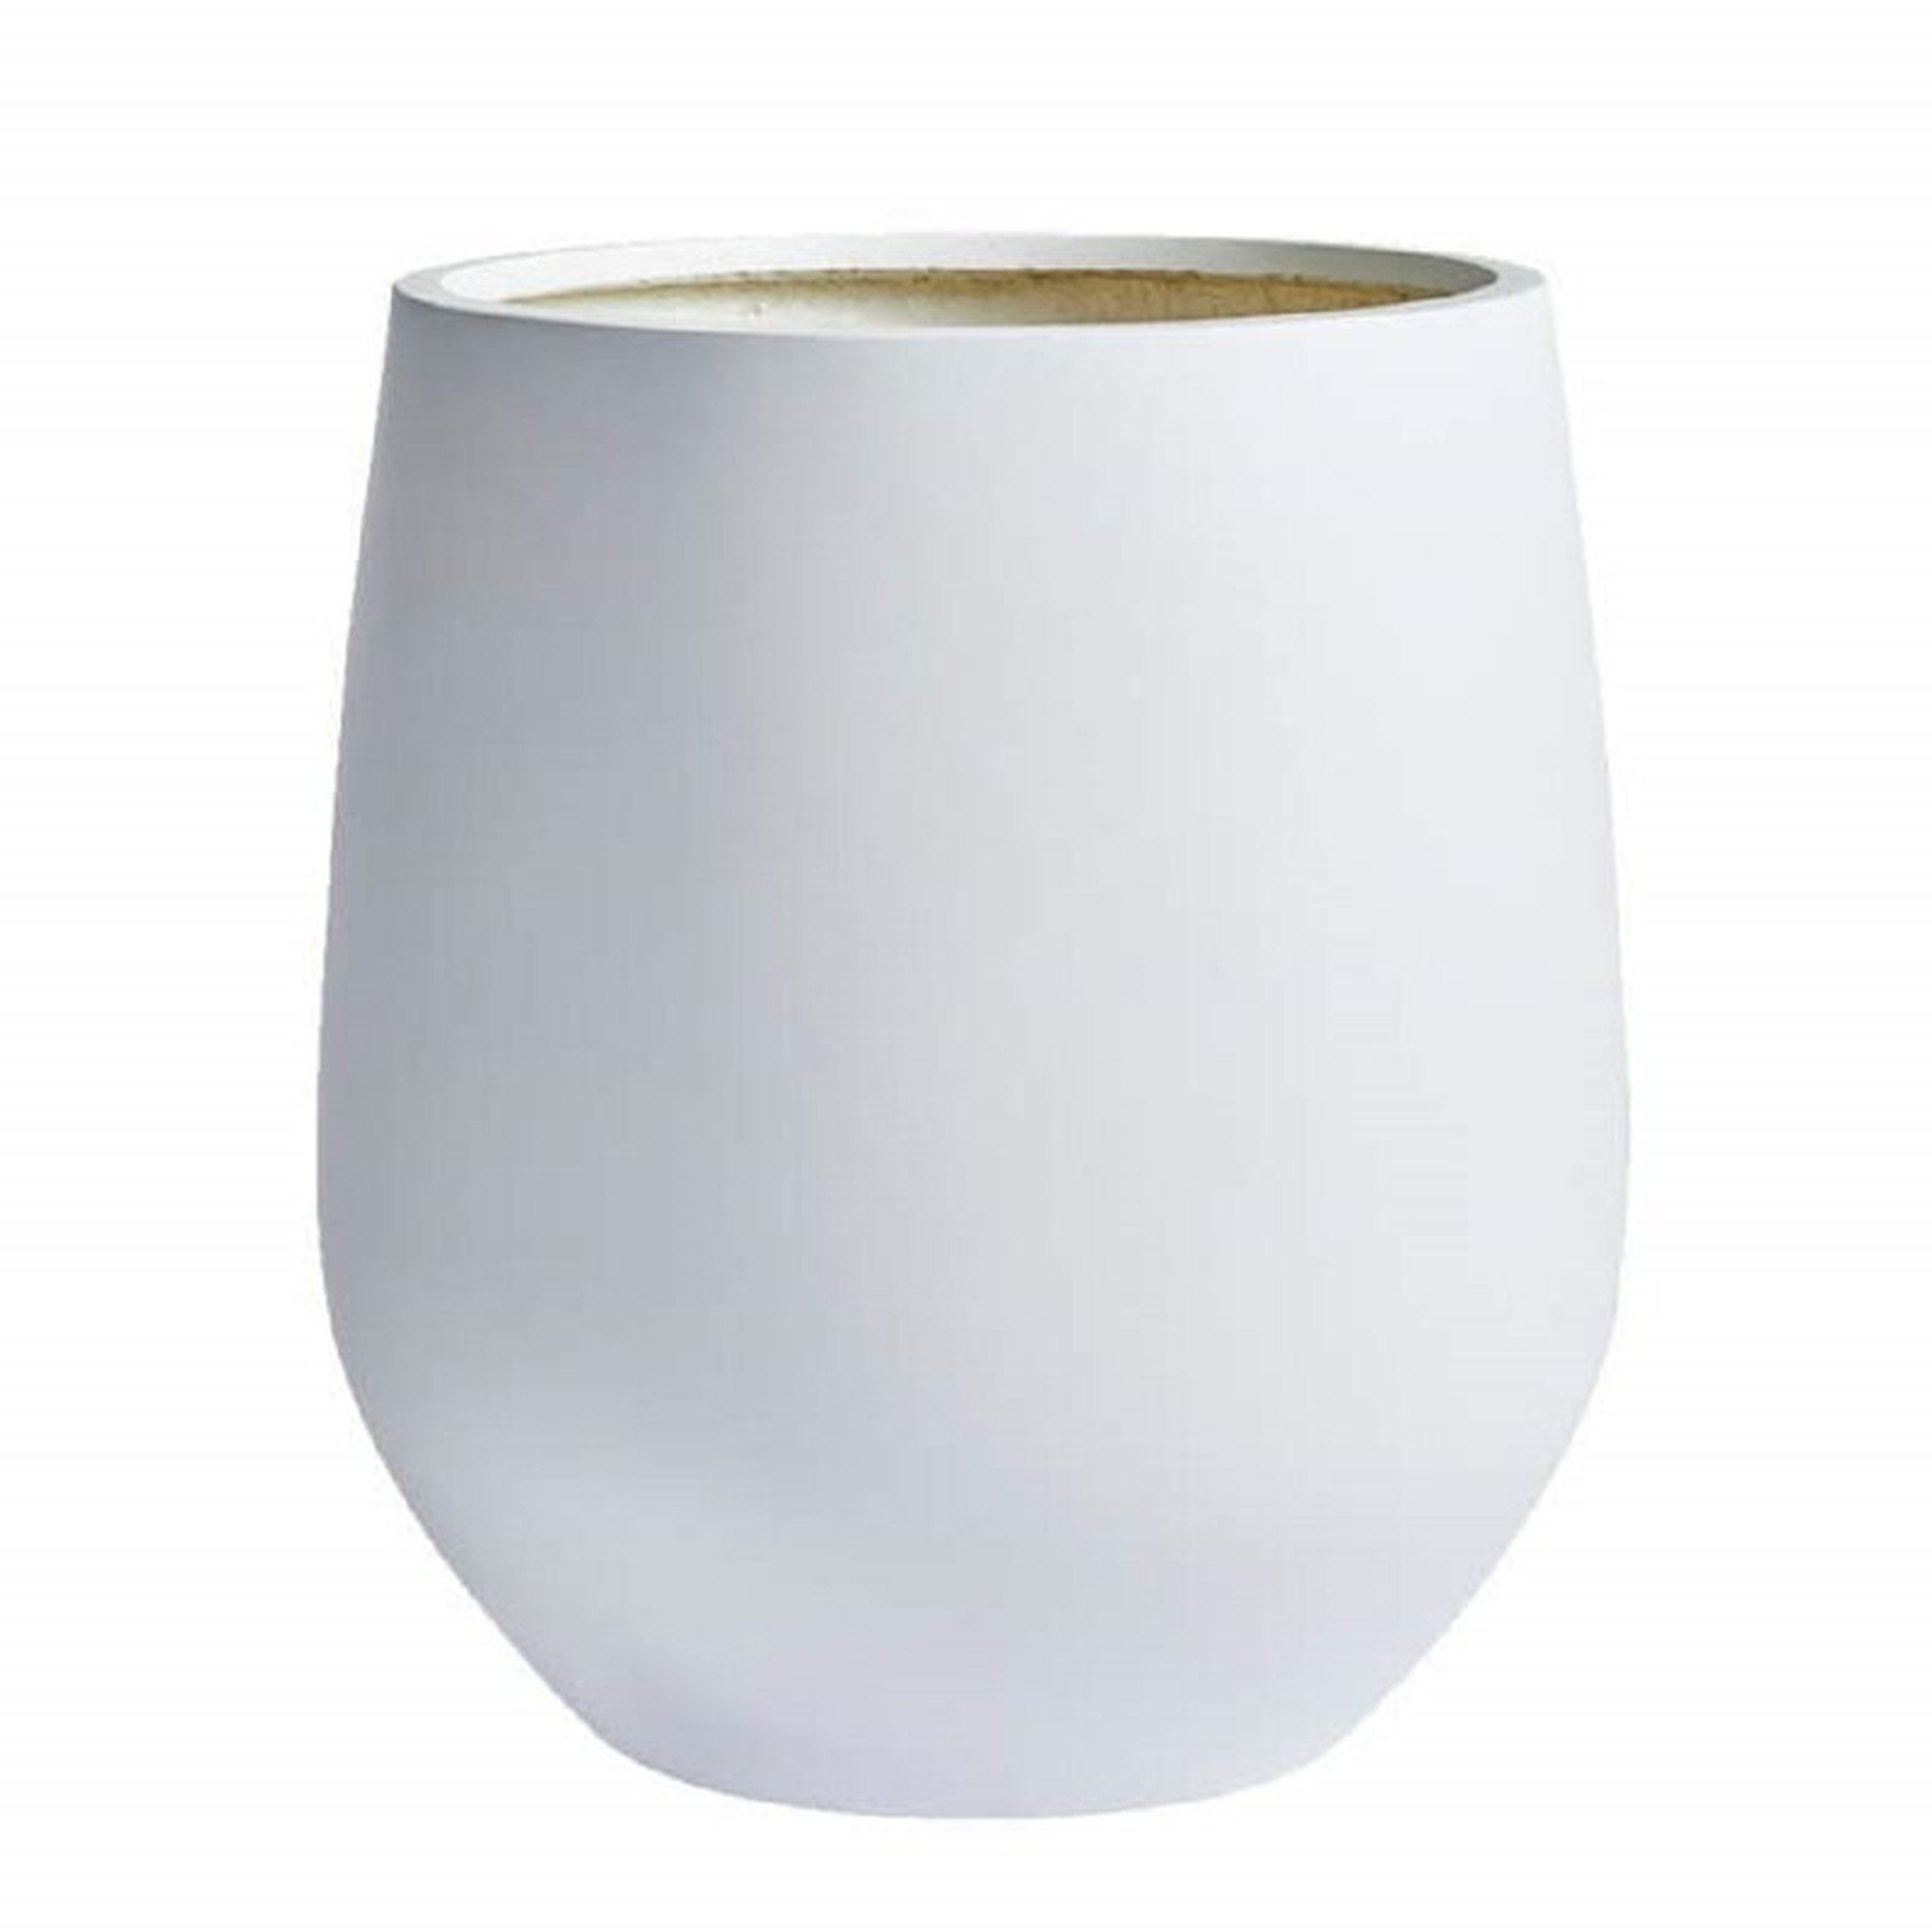 Lavoir 1-Piece Stone Pot Planter Set white, 12"x12"x11" - Wayfair